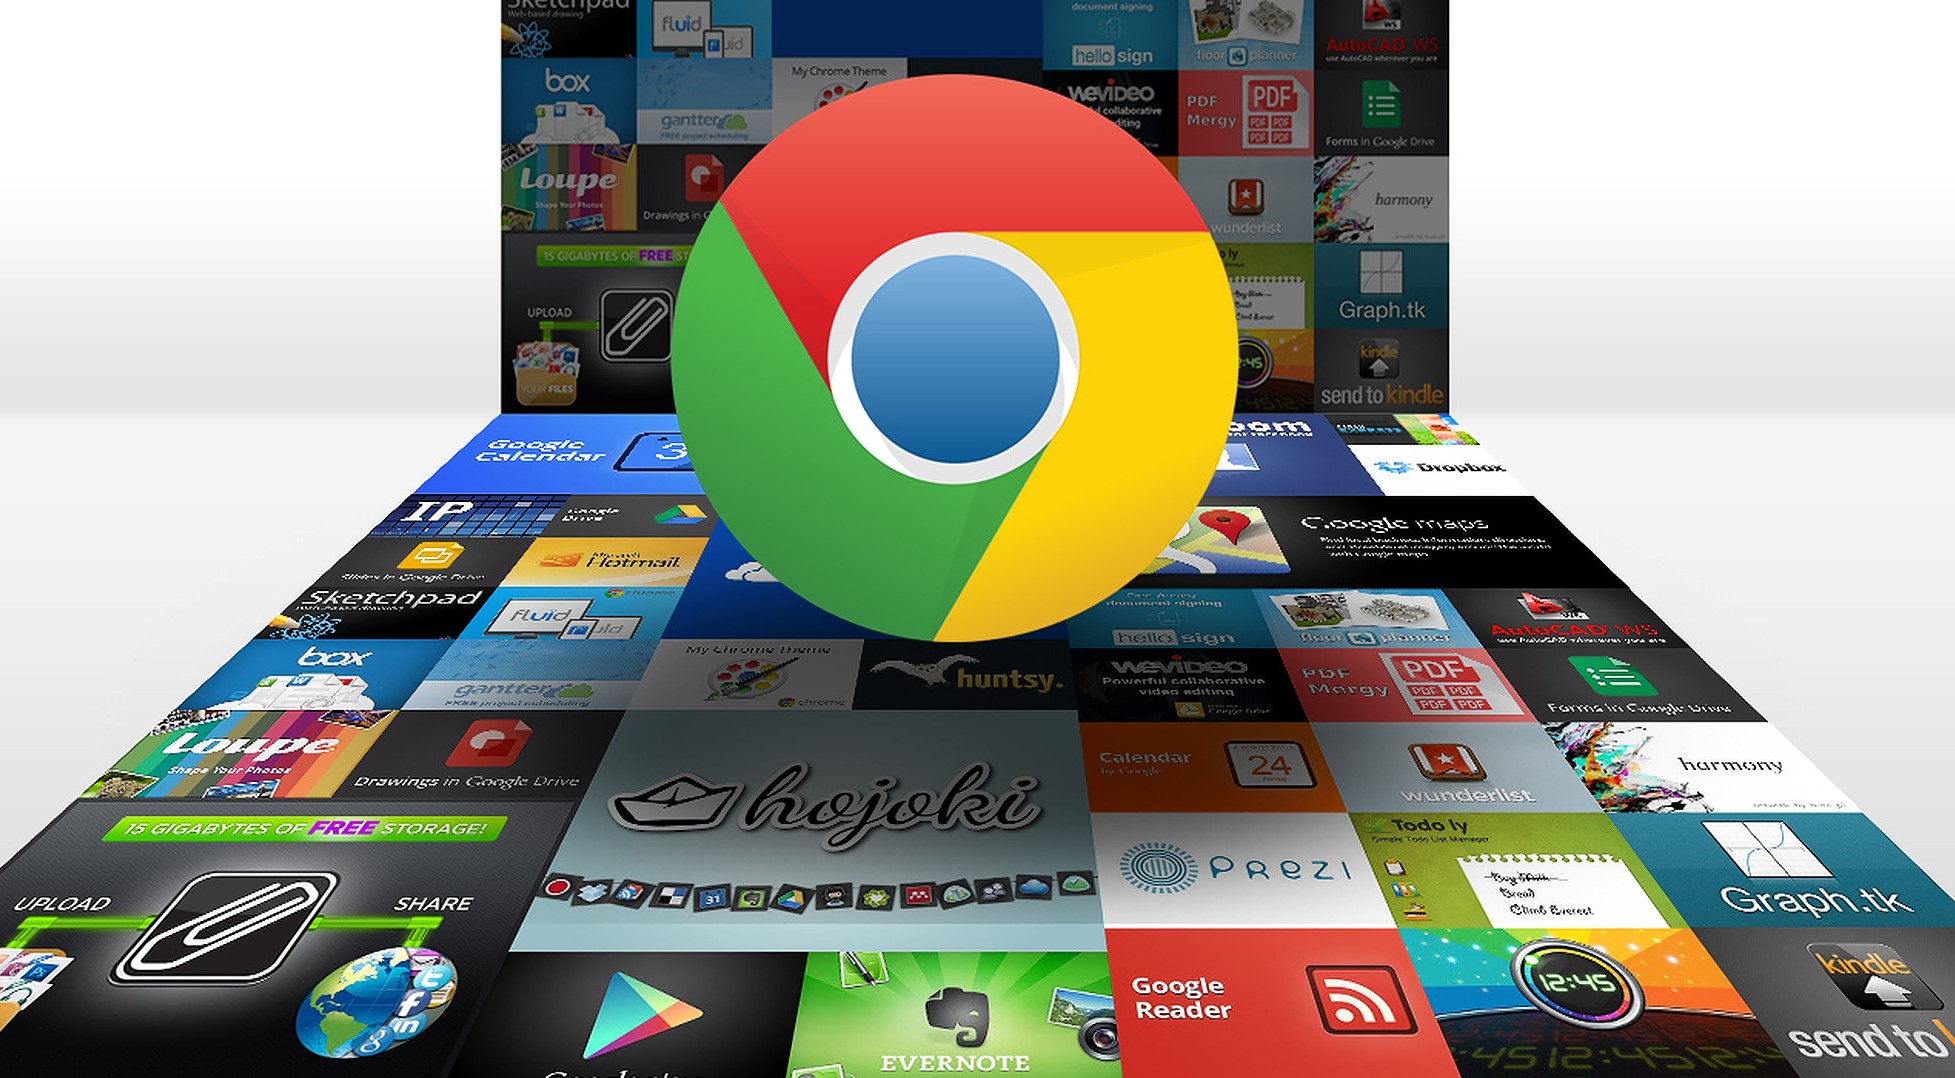 Chrome applications. Гугл хром. Chrome расширения. Расширения гугл хром. Полезные расширения для браузера.